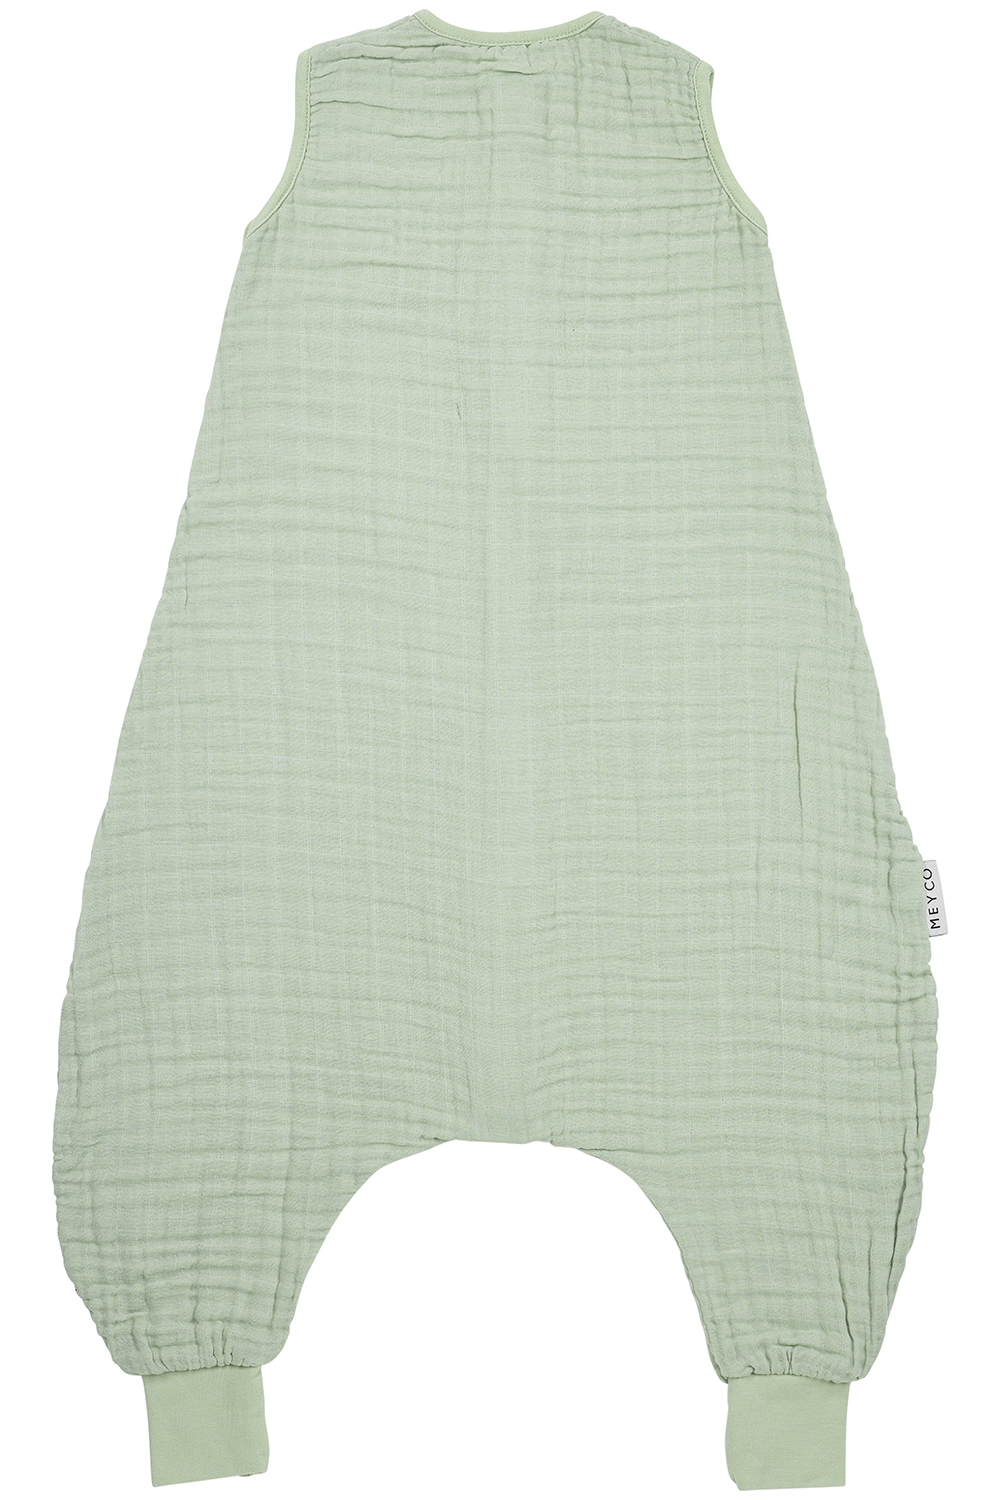 Baby zomer slaapoverall jumper pre-washed hydrofiel Uni - soft green - 104cm